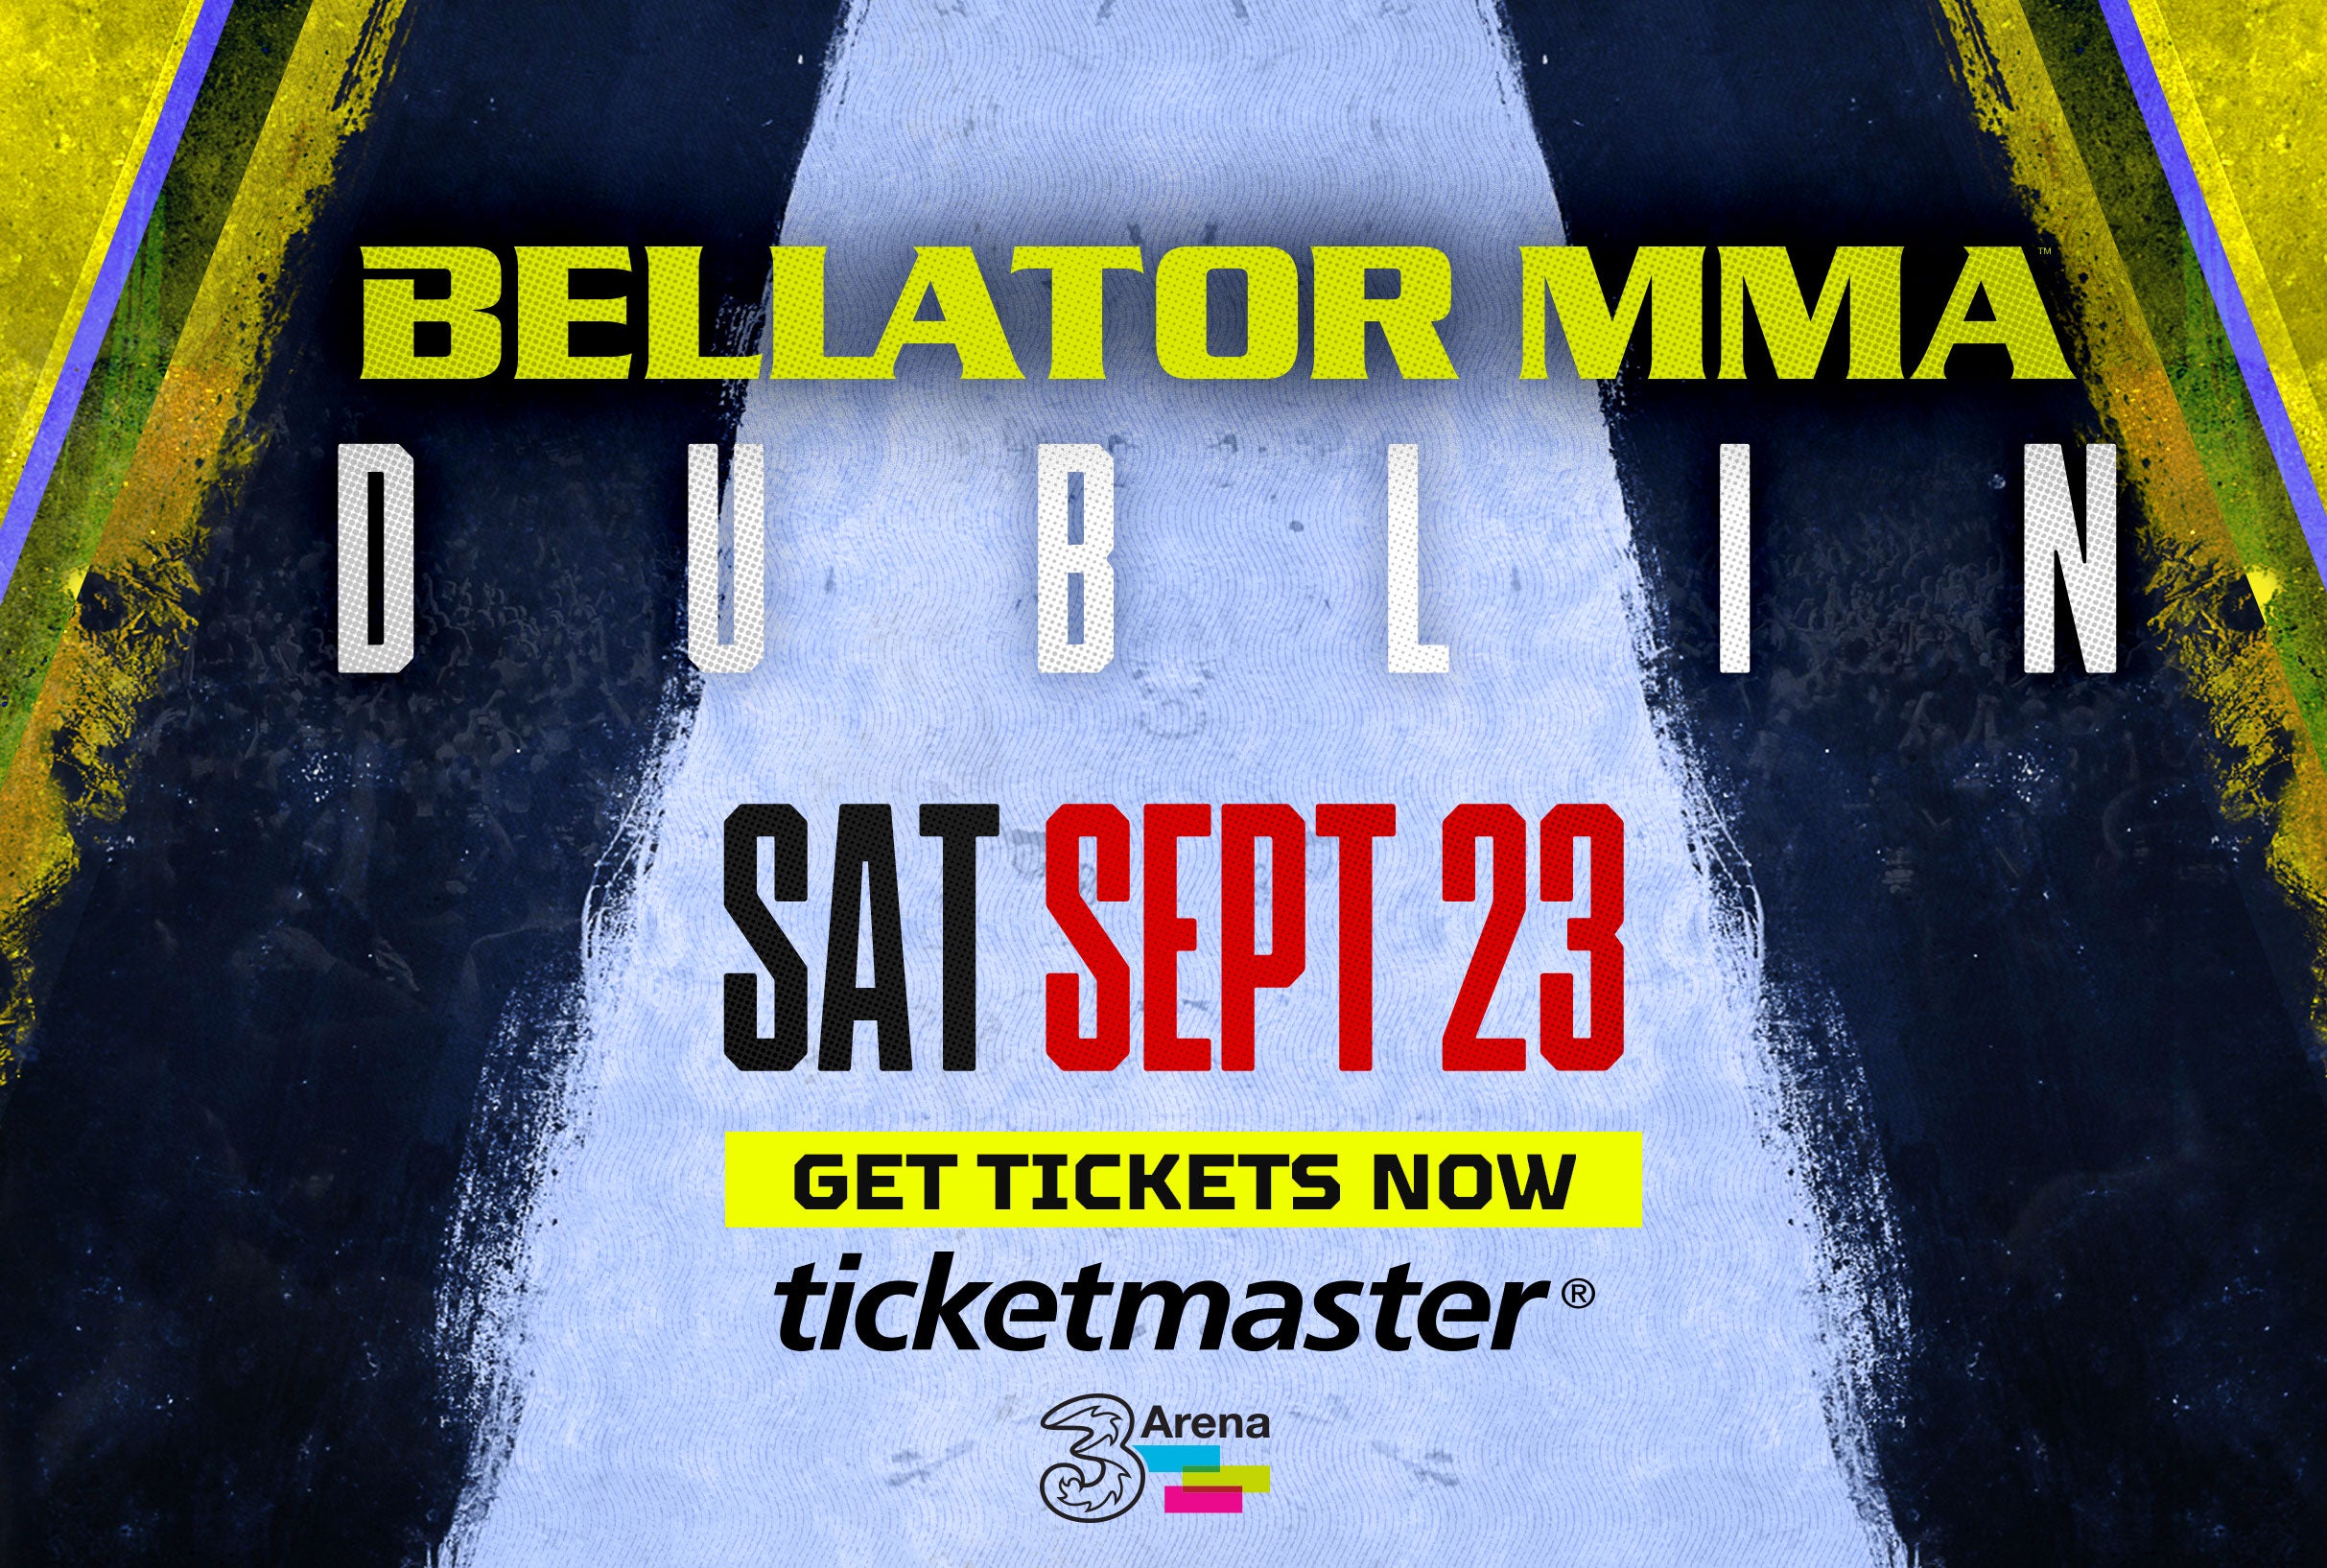 BELLATOR MMA in Dublin promo photo for Bellator presale offer code